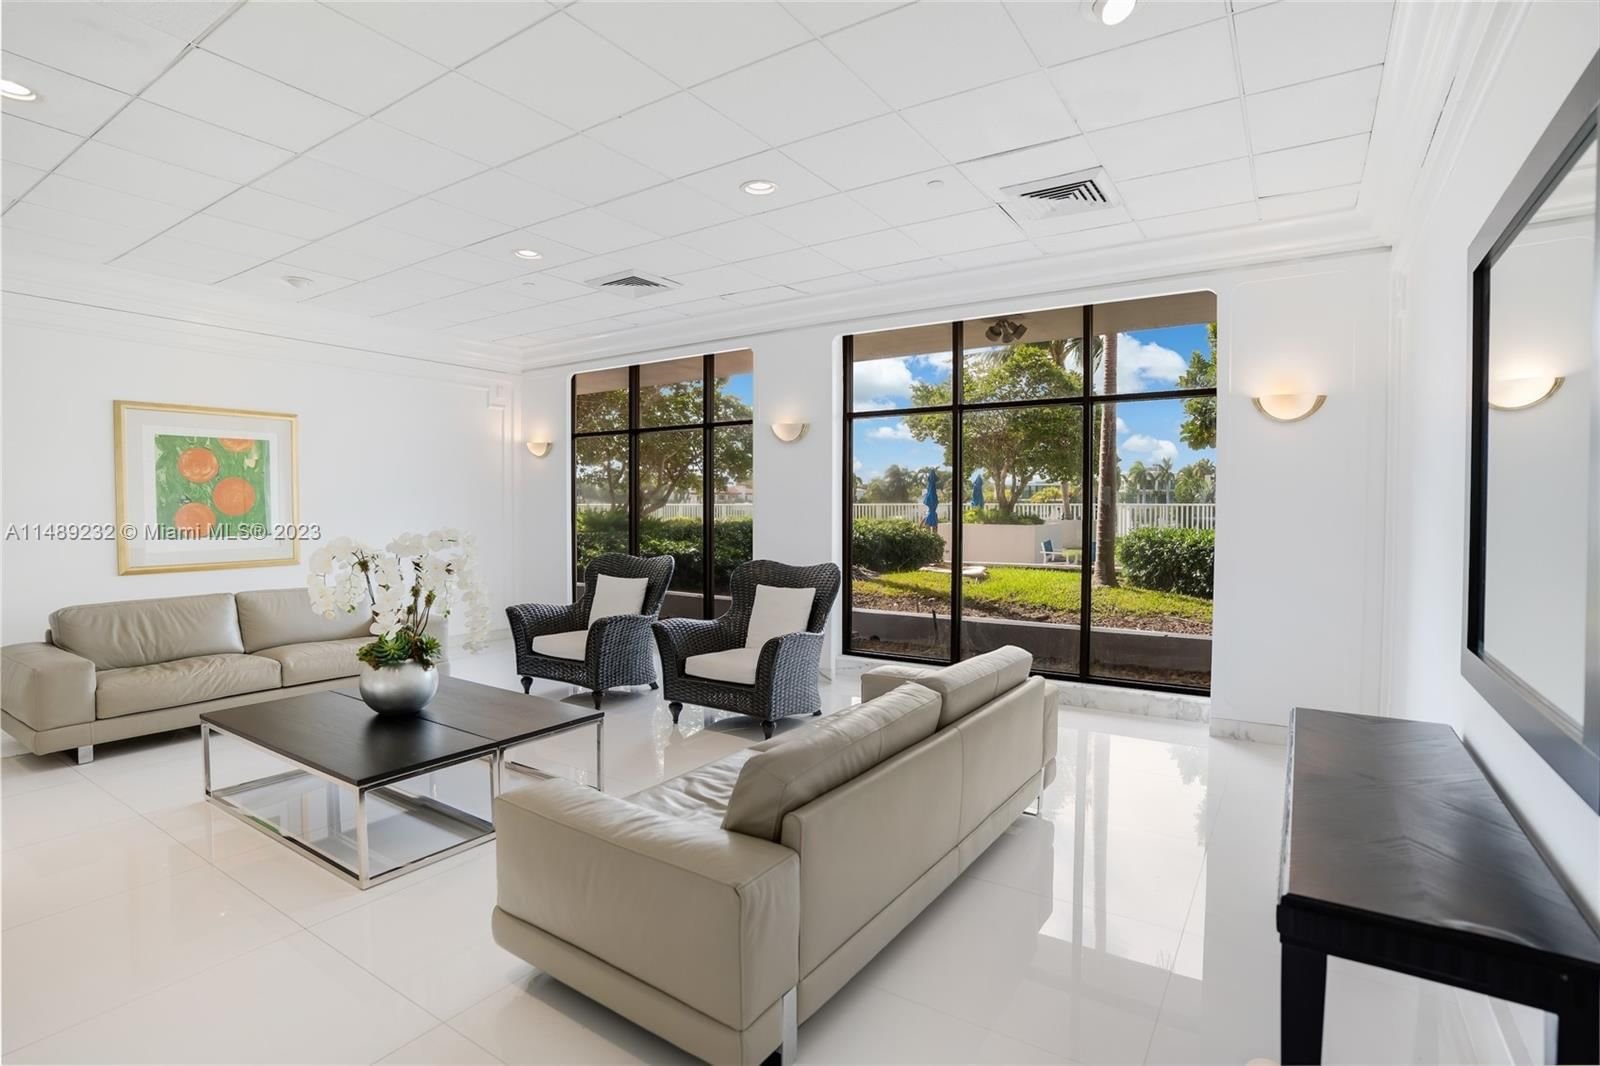 Real estate property located at 5700 Collins Ave #12G, Miami-Dade County, Miami Beach, FL